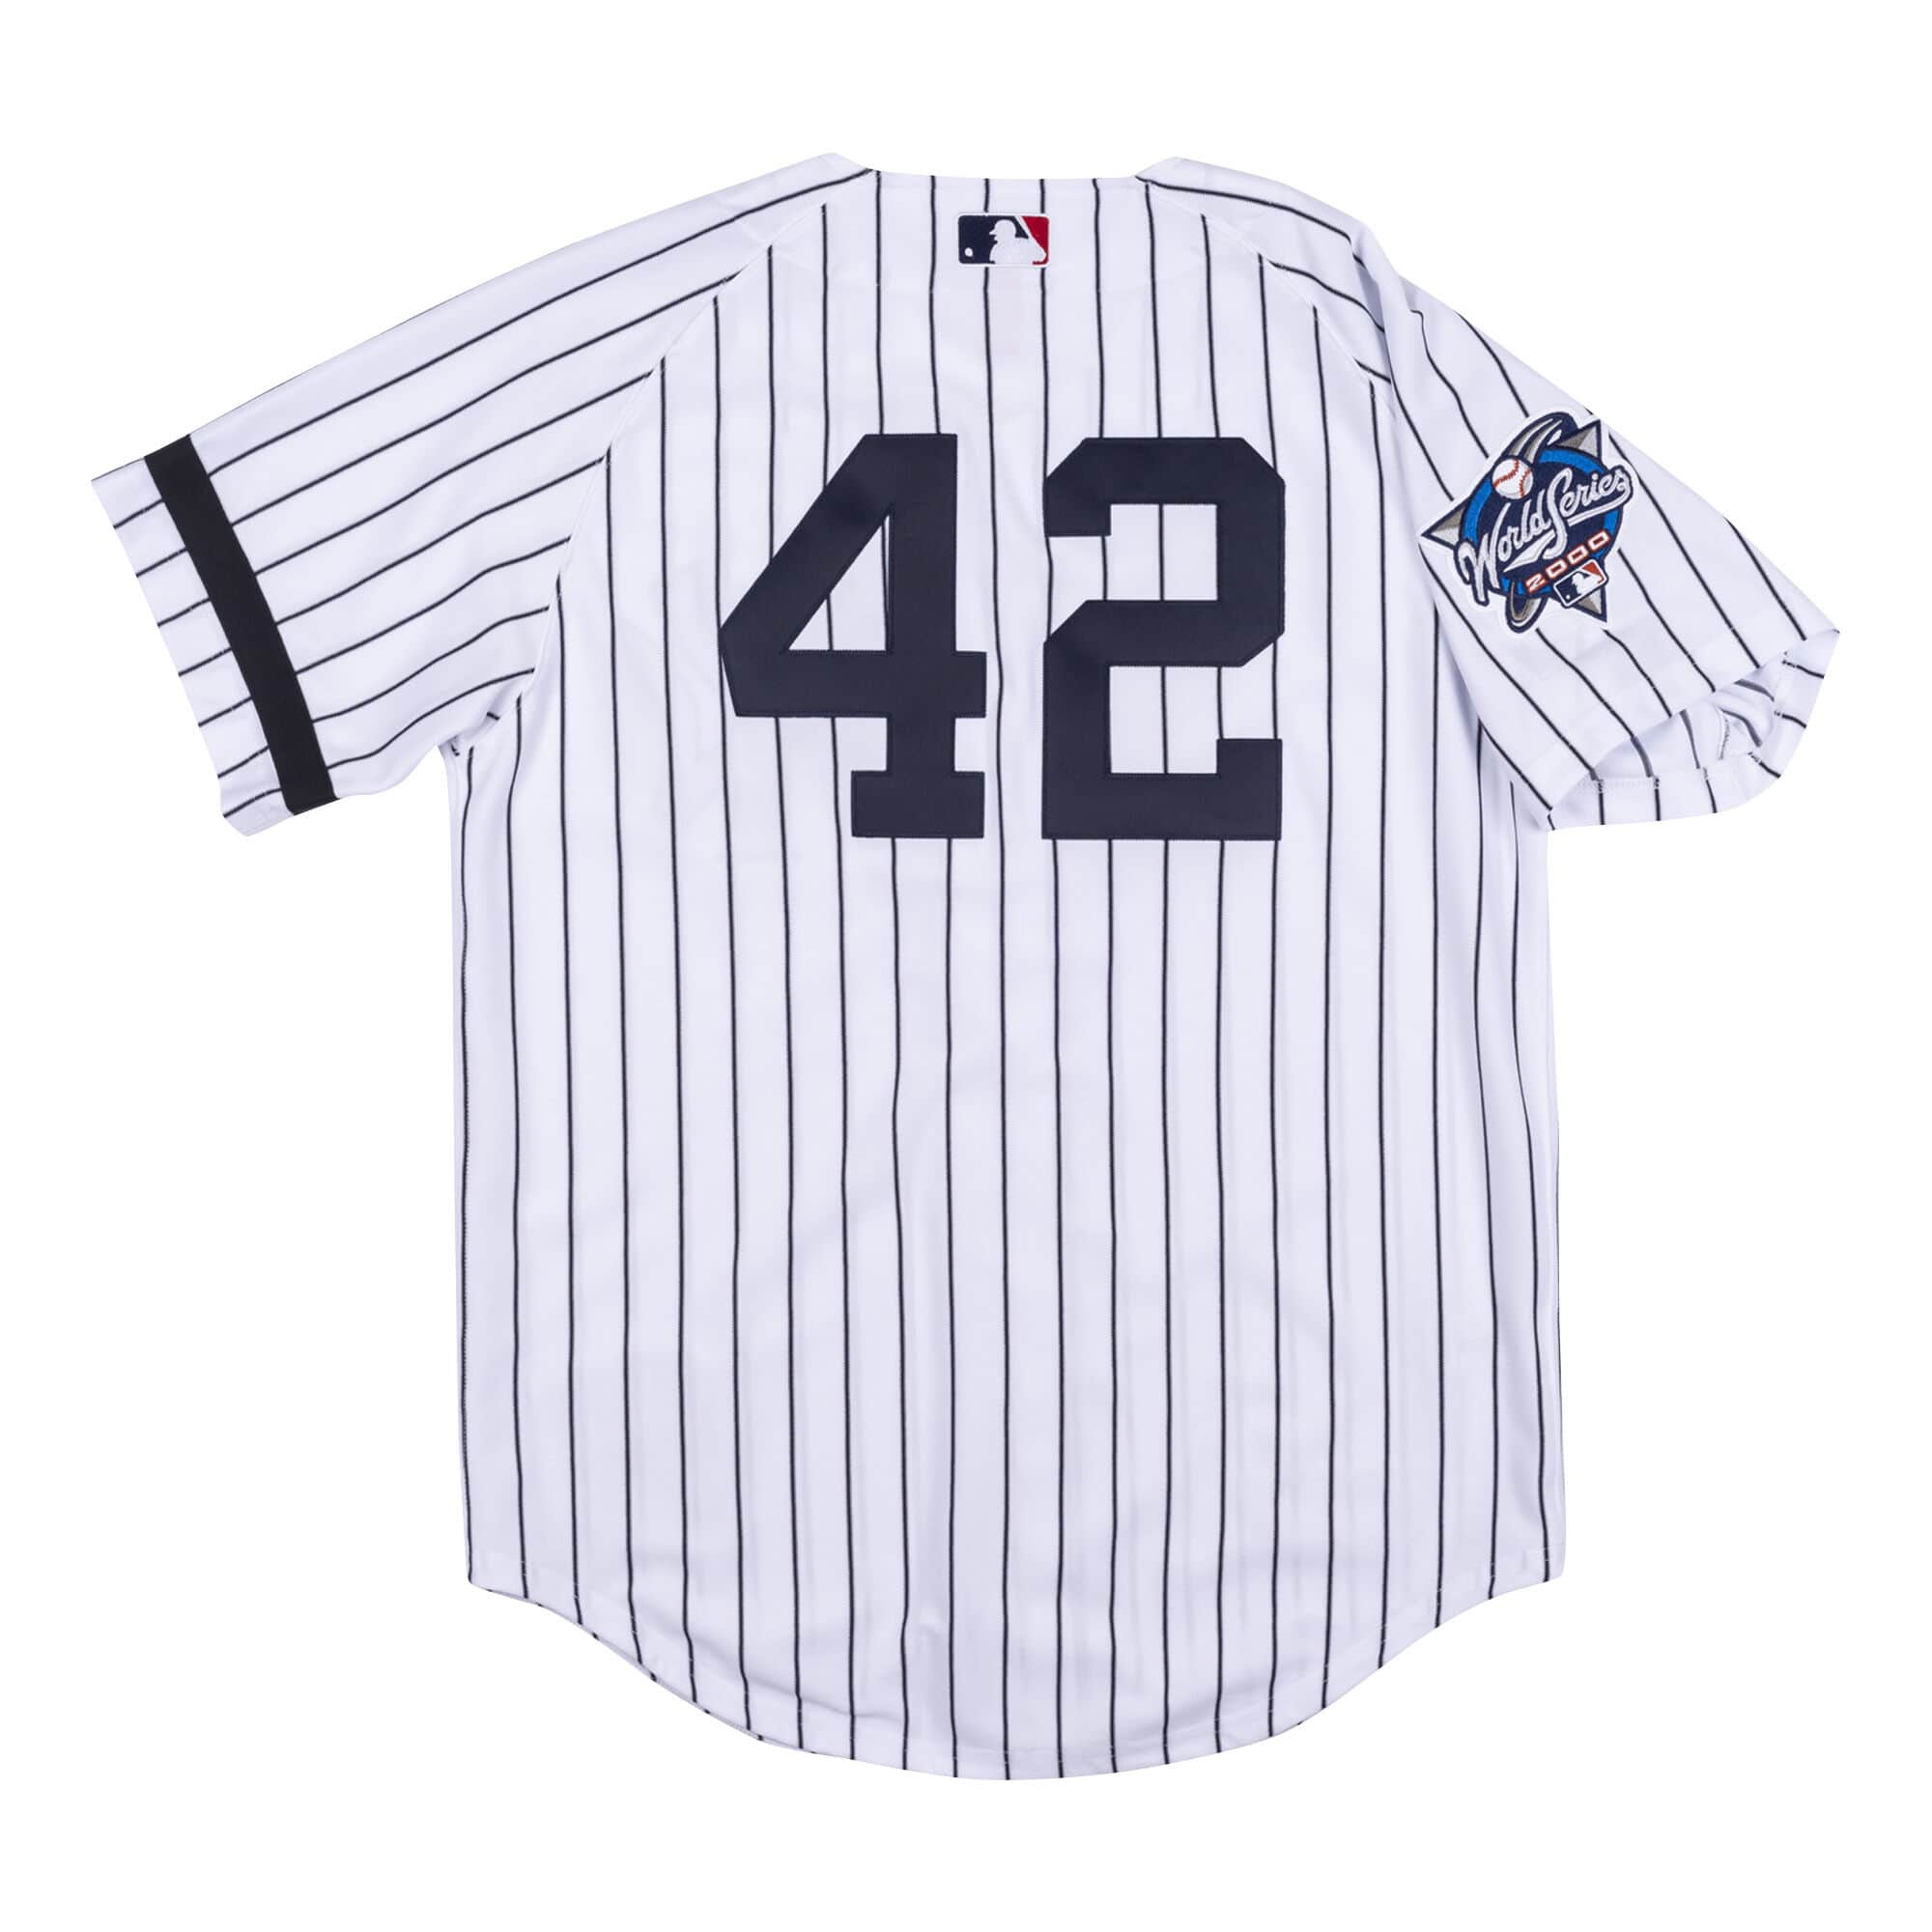 Shop Mitchell & Ness New York Yankees Mariano Rivera 1995 Authentic Jersey  ABPJ3051-NYY95MRINAVY blue